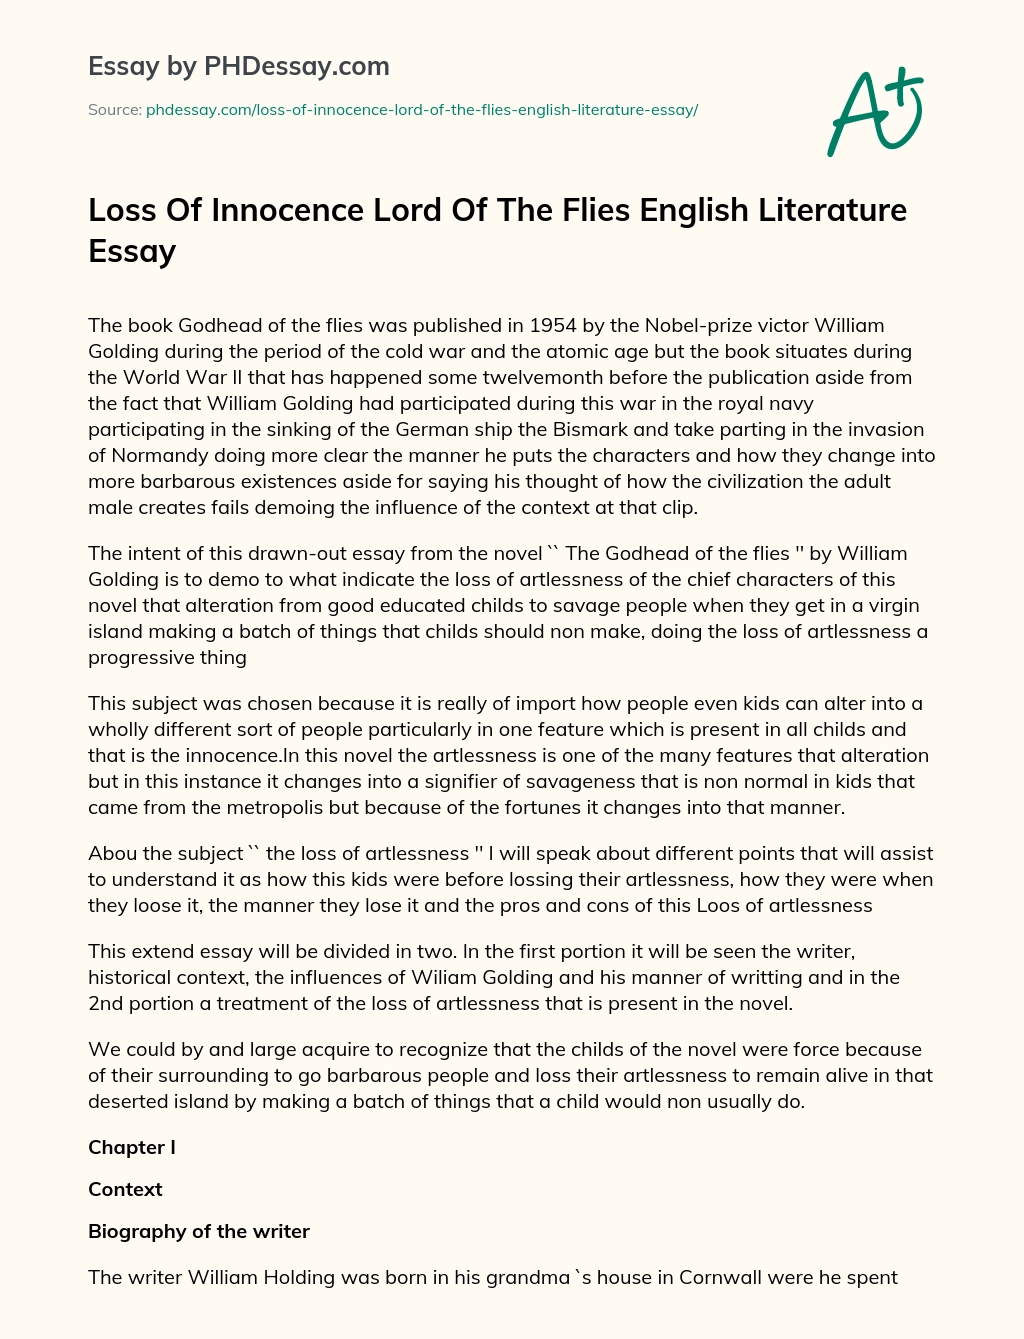 Loss Of Innocence Lord Of The Flies English Literature Essay essay